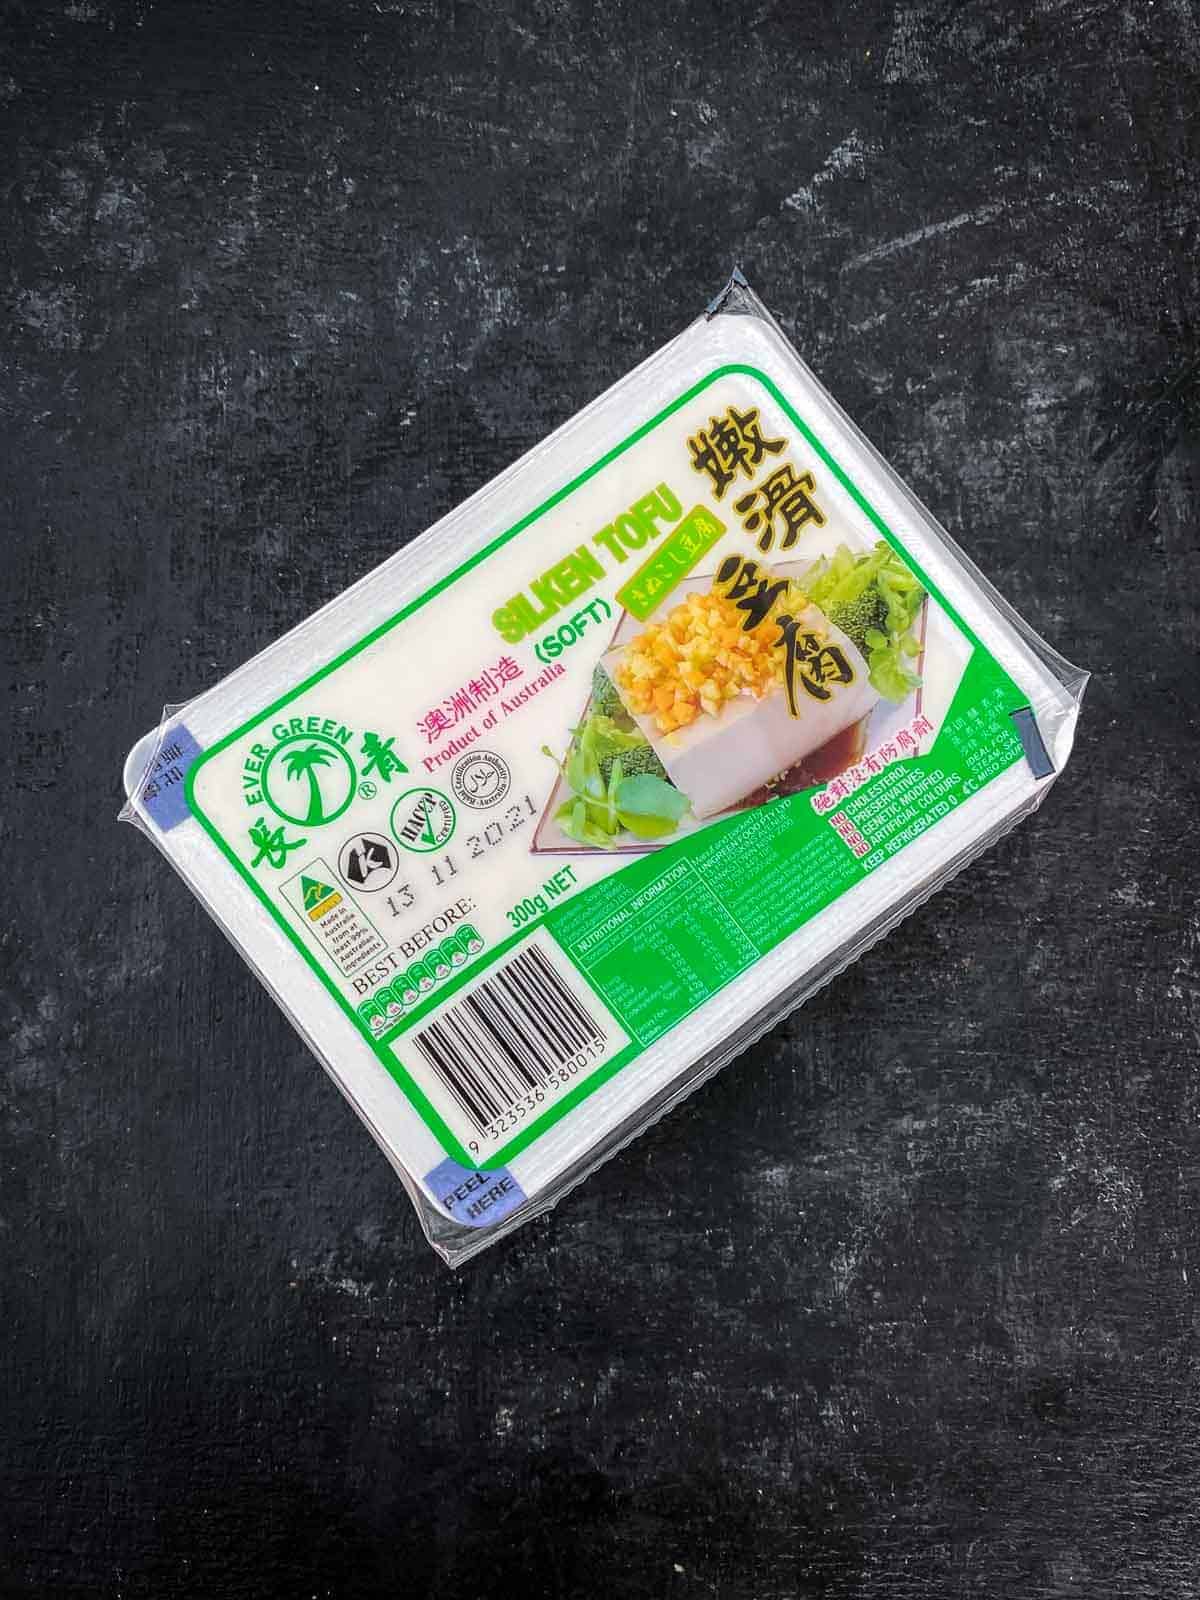 Silken tofu in it's packaging